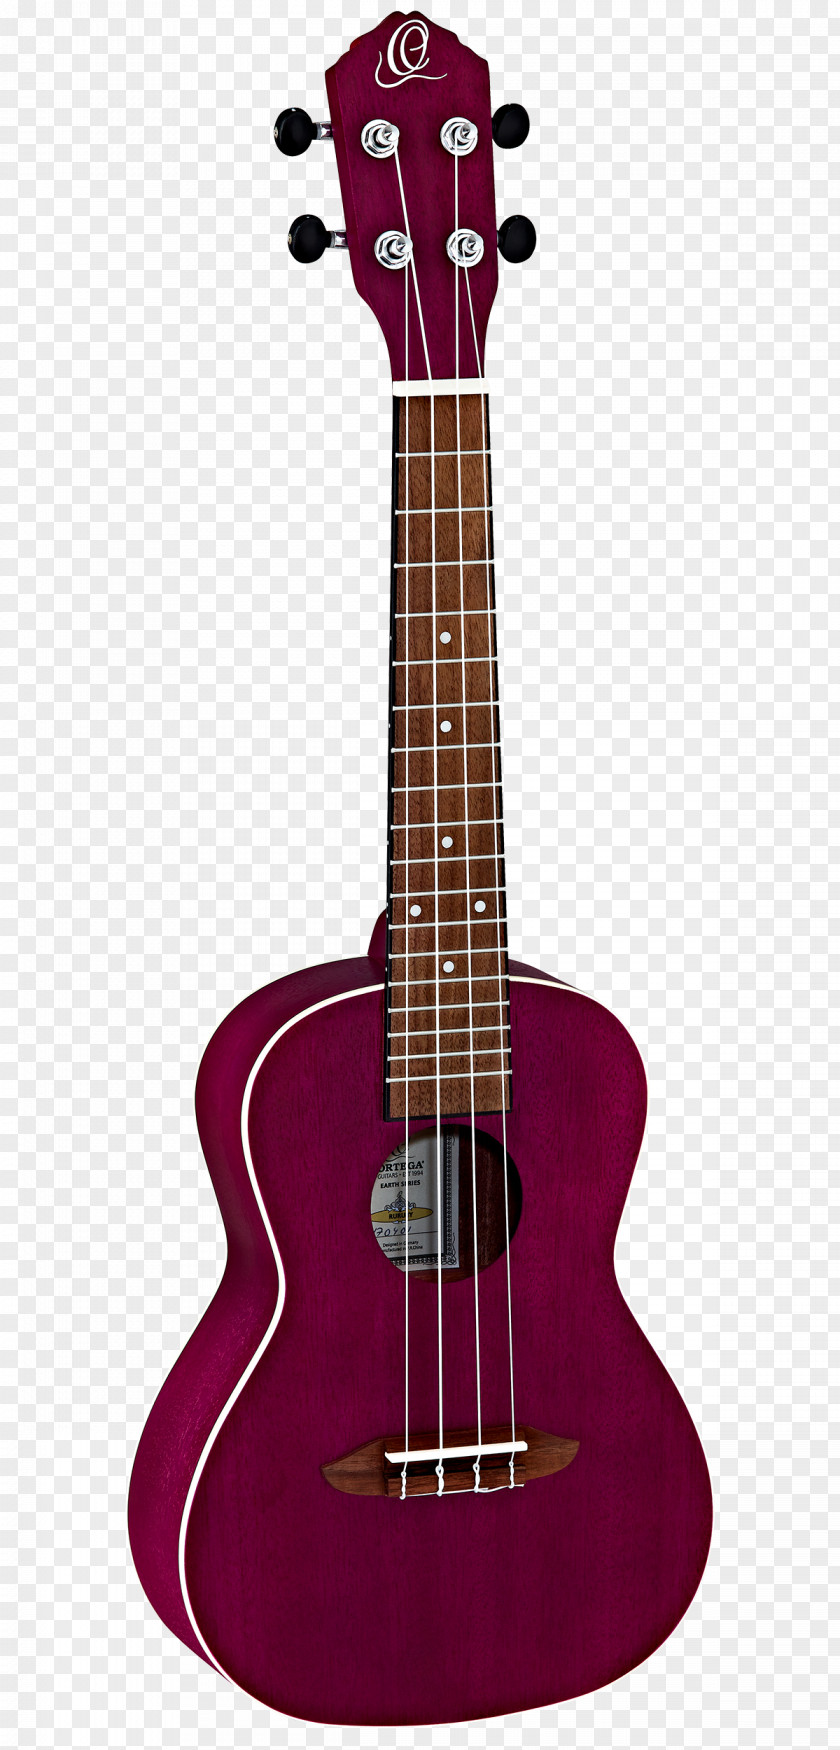 Amancio Ortega Ukulele Musical Instruments Guitar Fingerboard Neck PNG